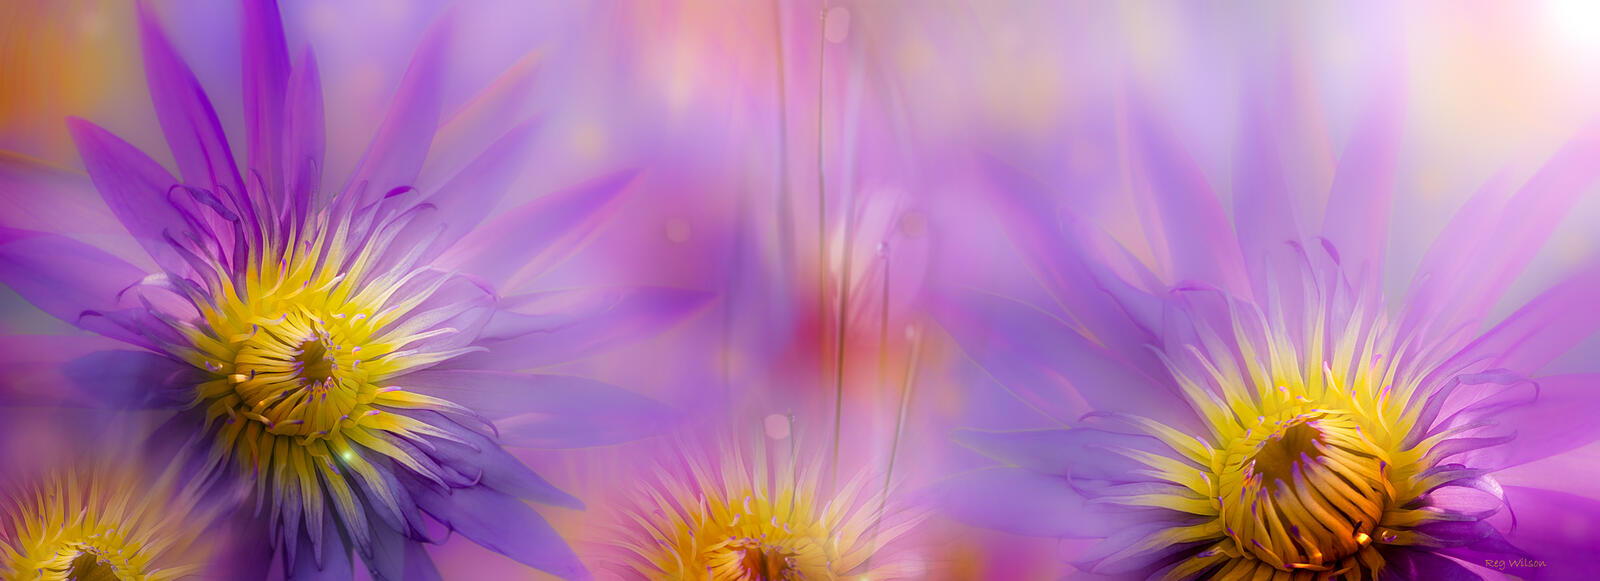 Free photo Blurred lotus flowers